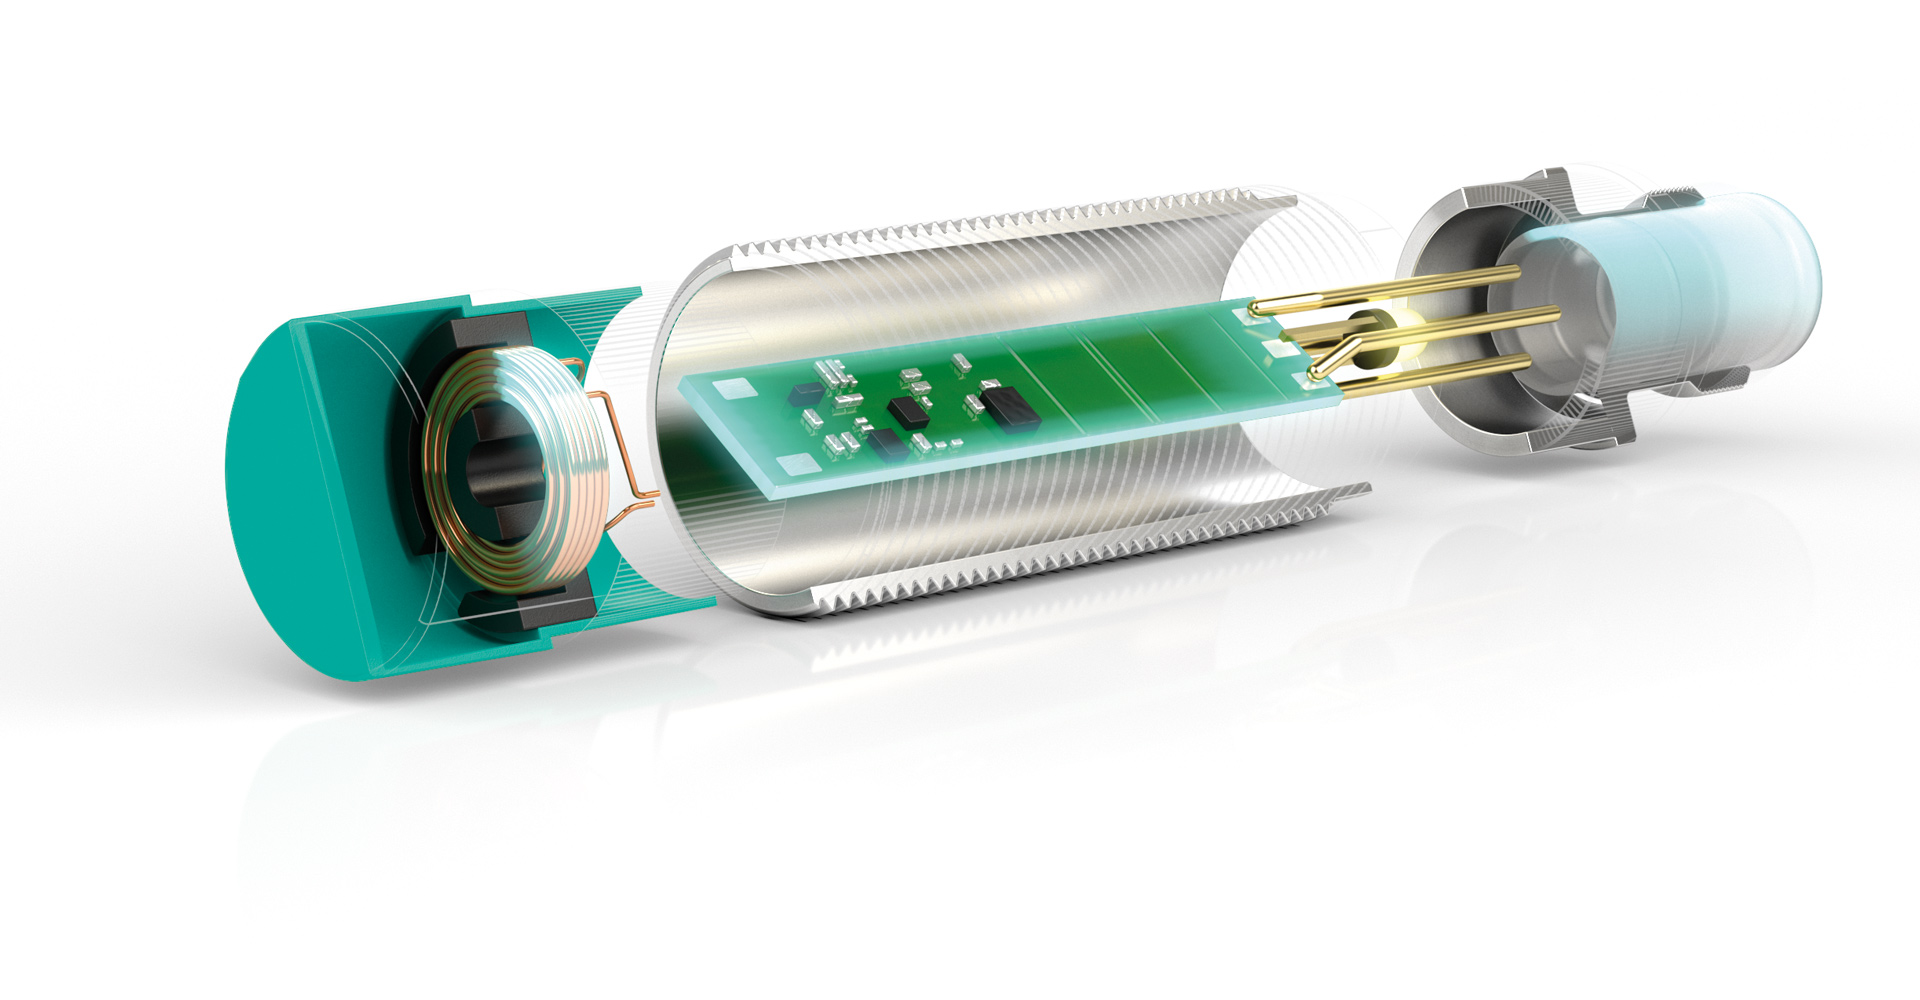 Pepperl+Fuchs Proximity Sensors, The Evolution of an Everlasting Technology 